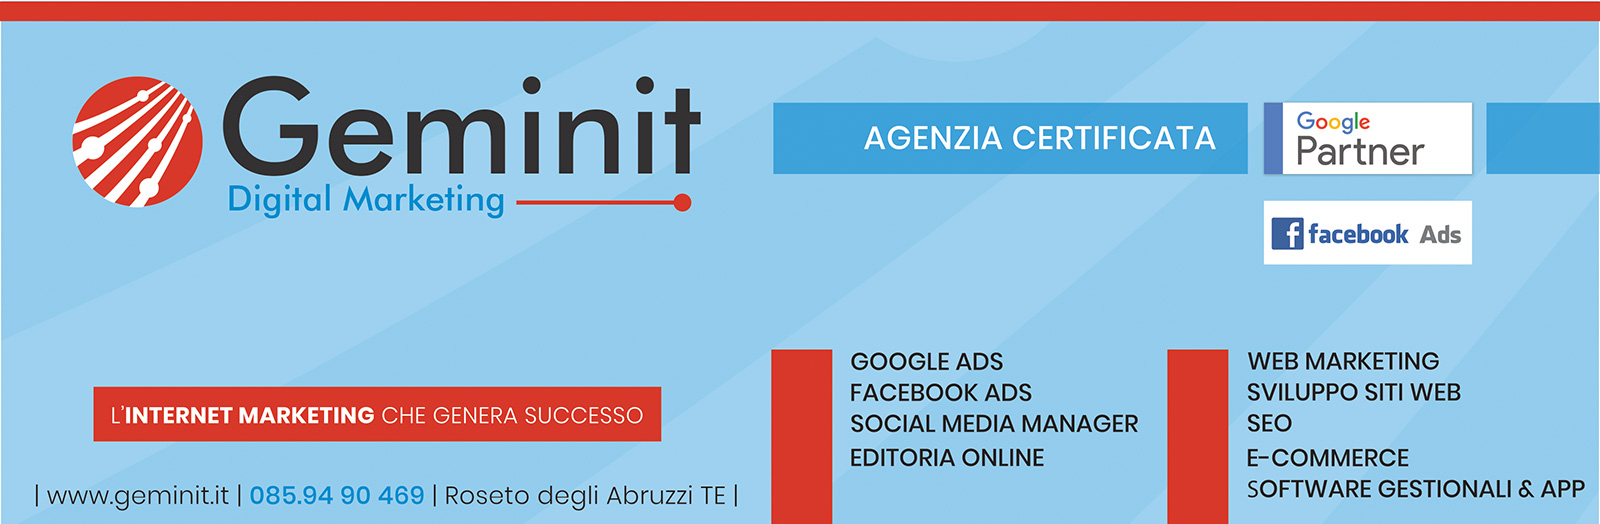 Geminit - Web Marketing, Siti Web, Software Gestionali